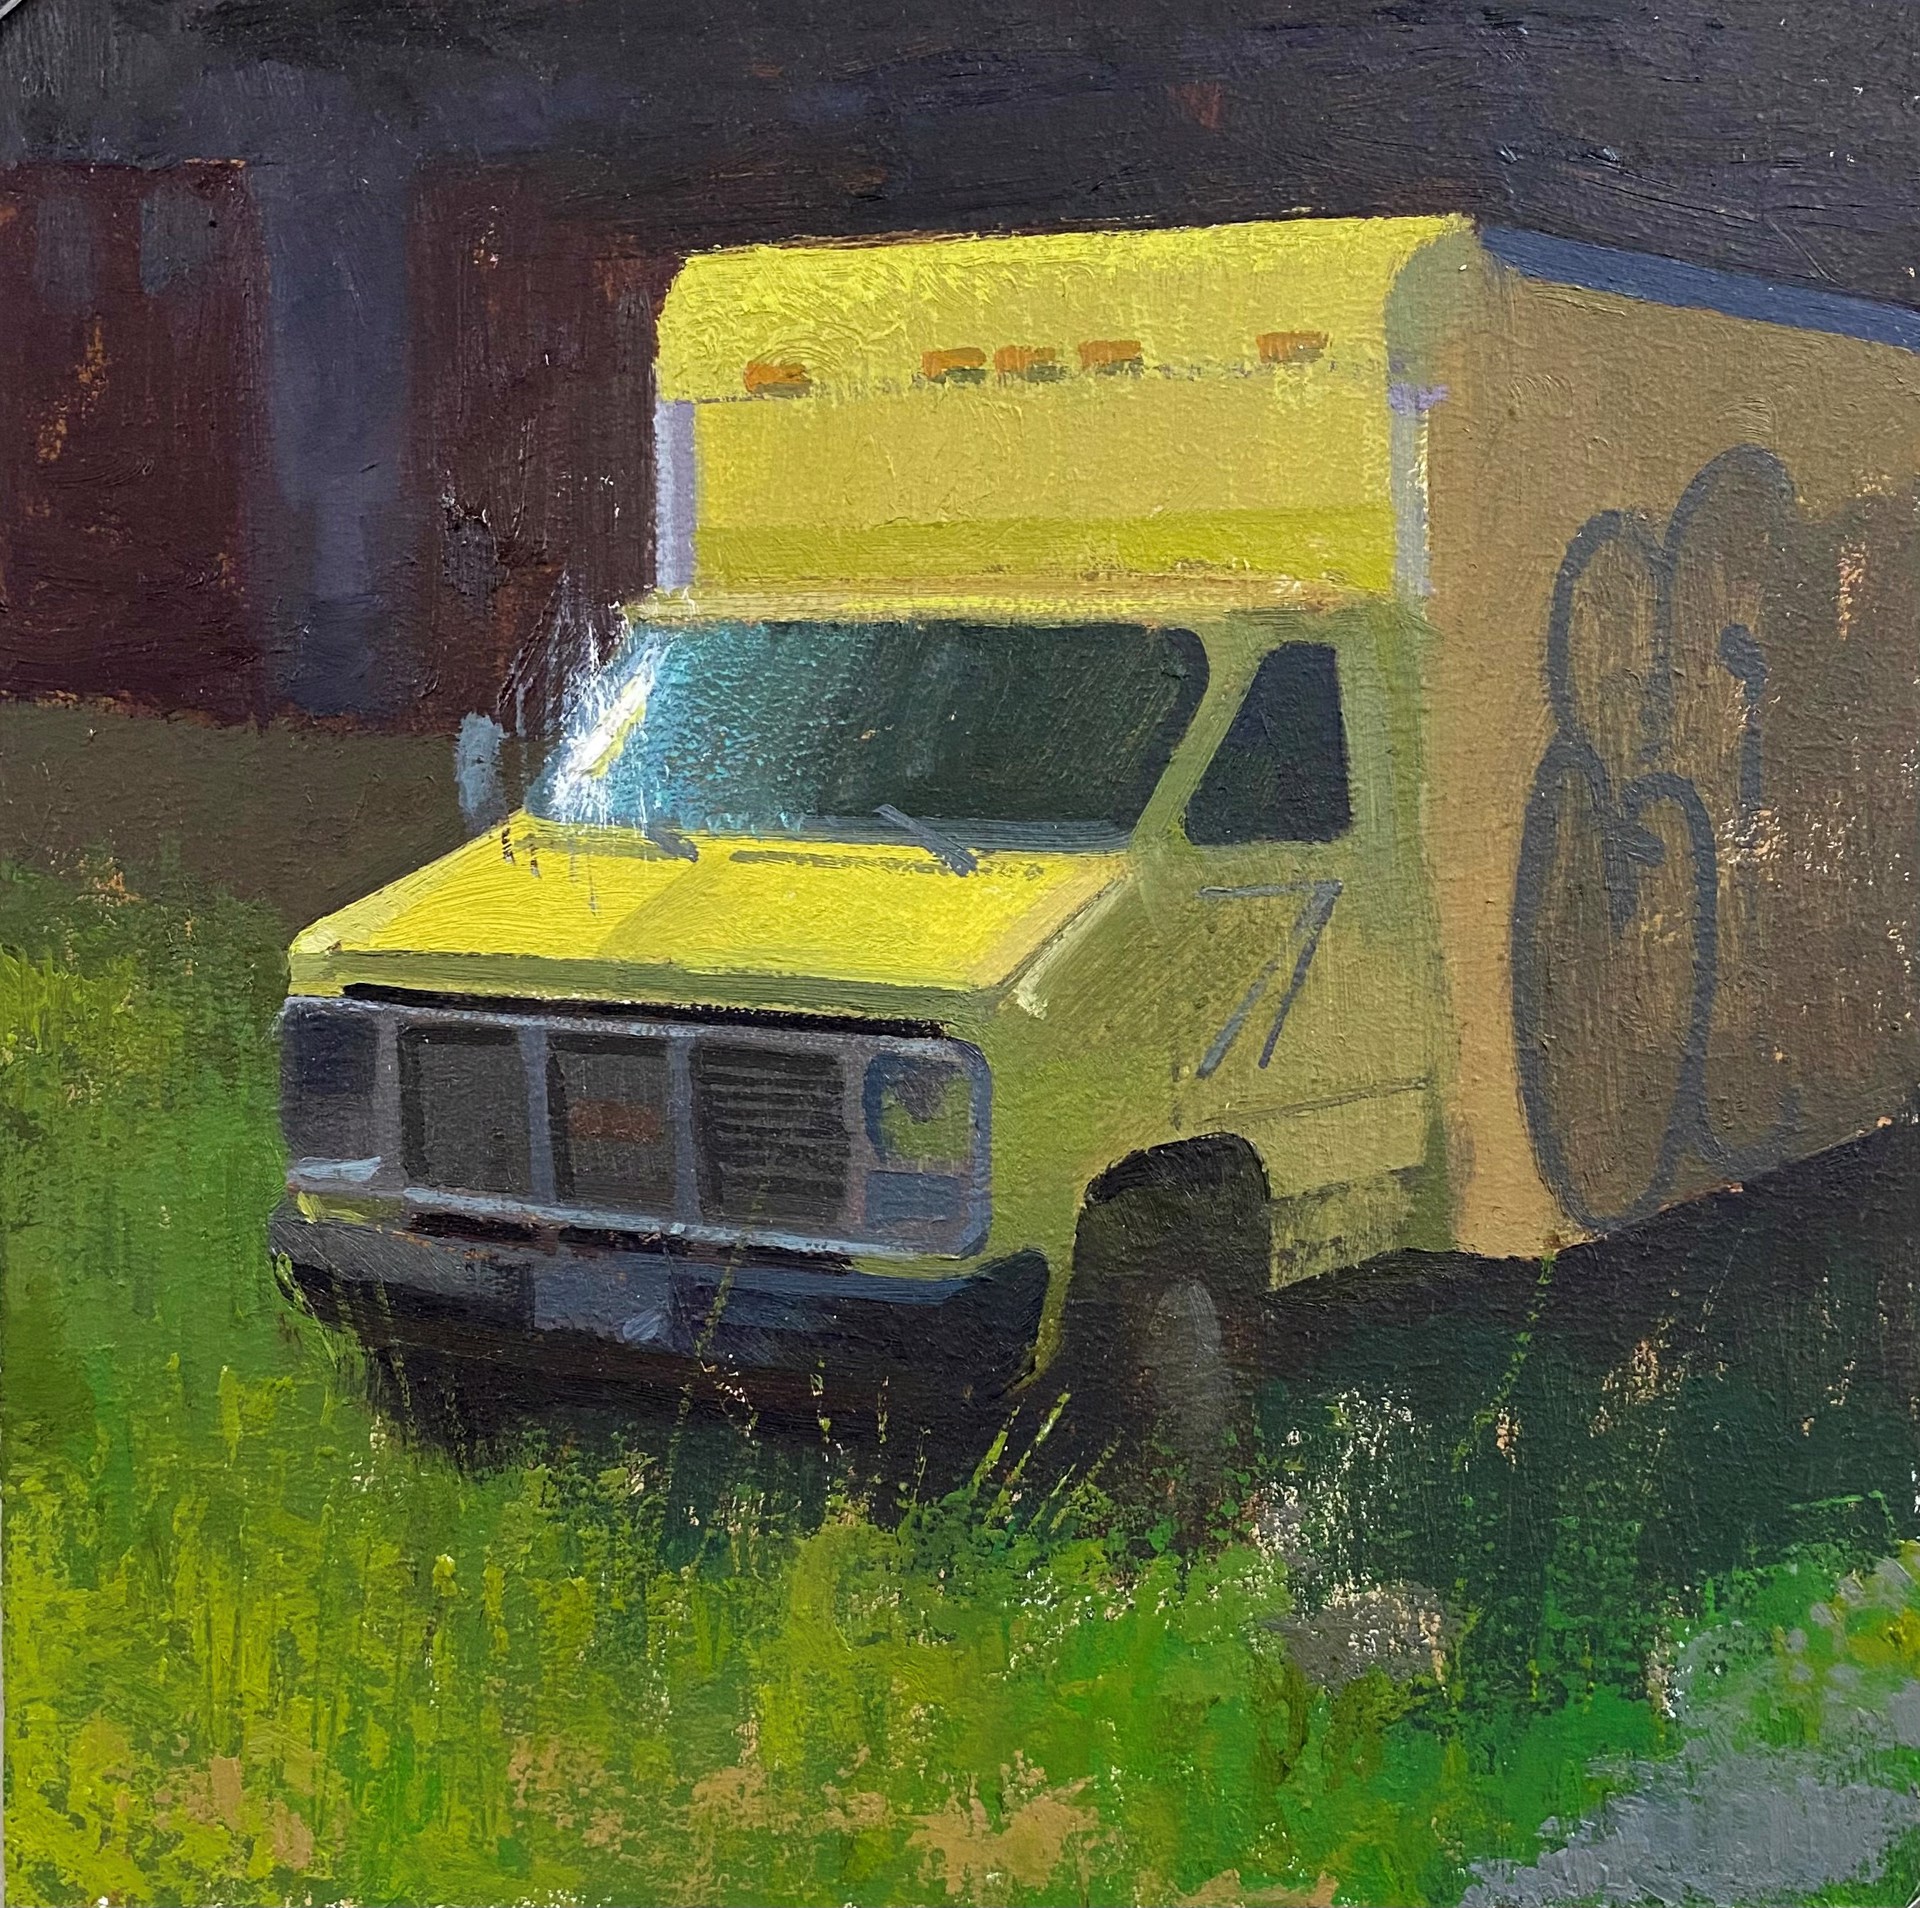 Box Truck by Brad Davis